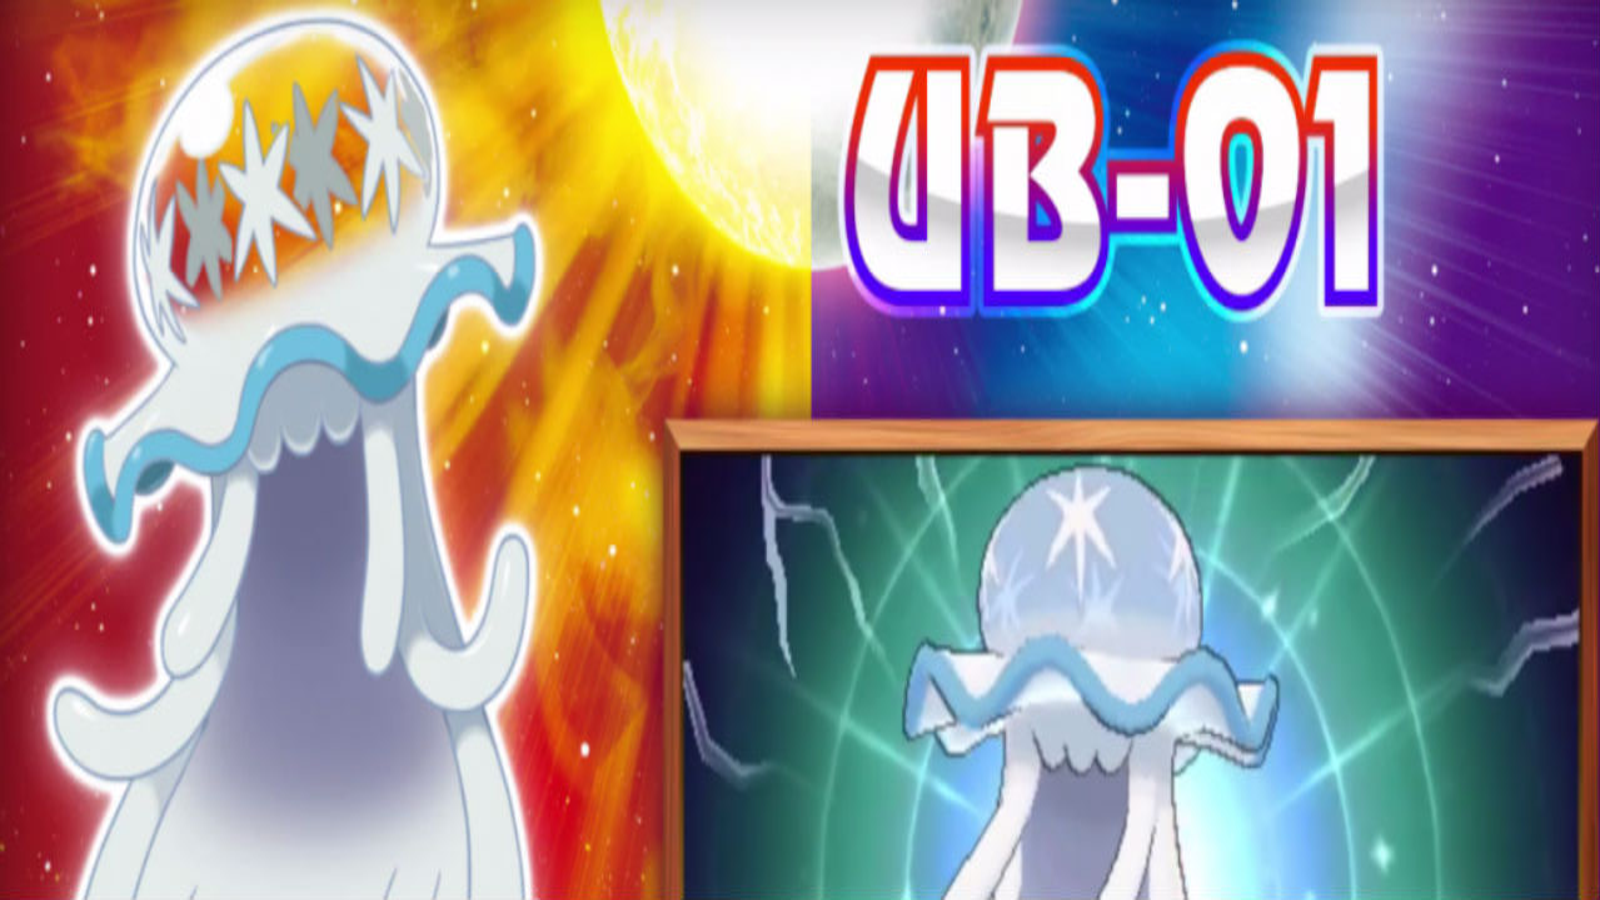 Ultra beast and roman god/planet symbols, Pokémon Sun and Moon